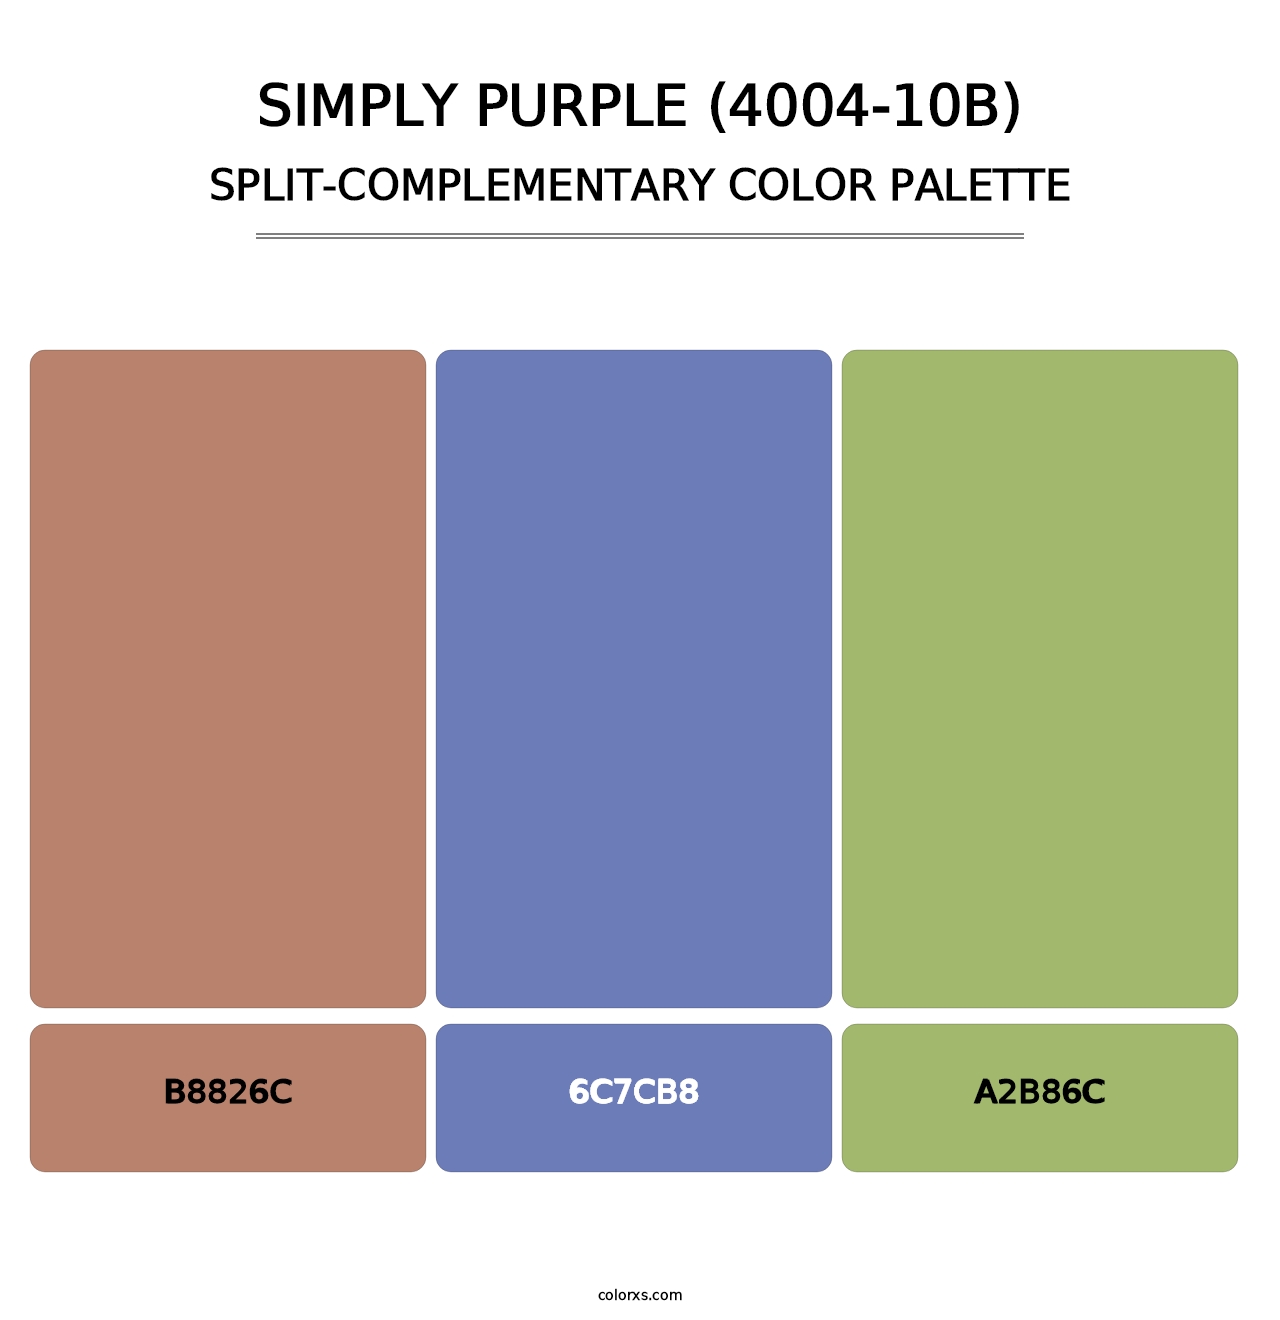 Simply Purple (4004-10B) - Split-Complementary Color Palette